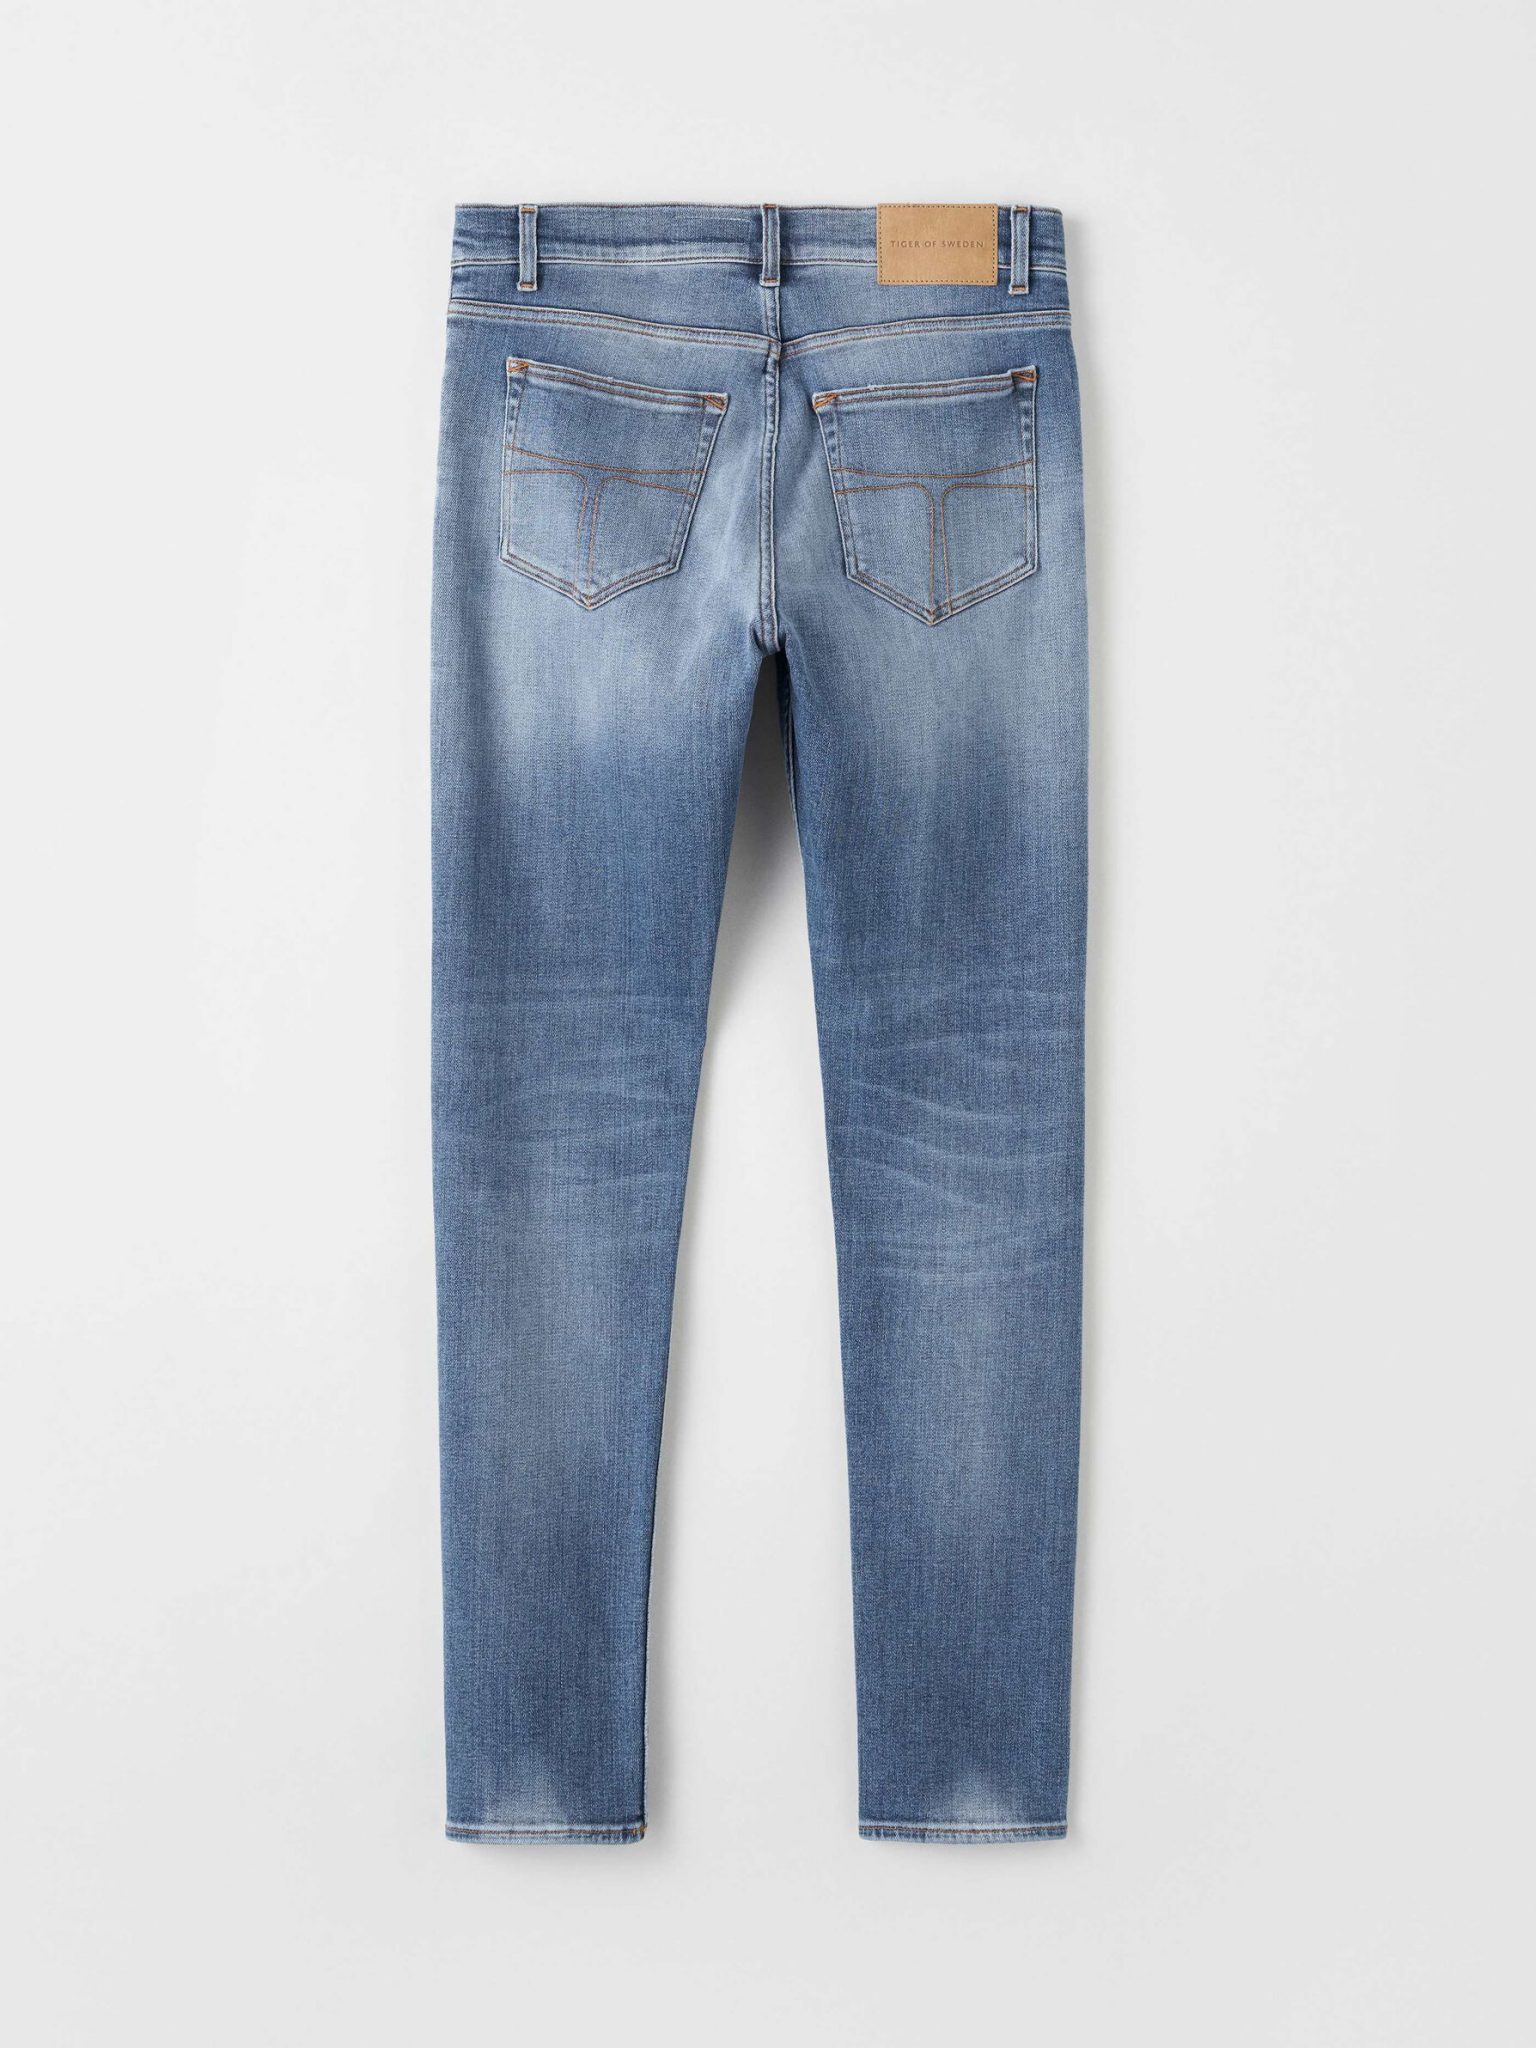 Buy Tiger of Sweden Evolve Jeans Medium Blue - Scandinavian Fashion Store